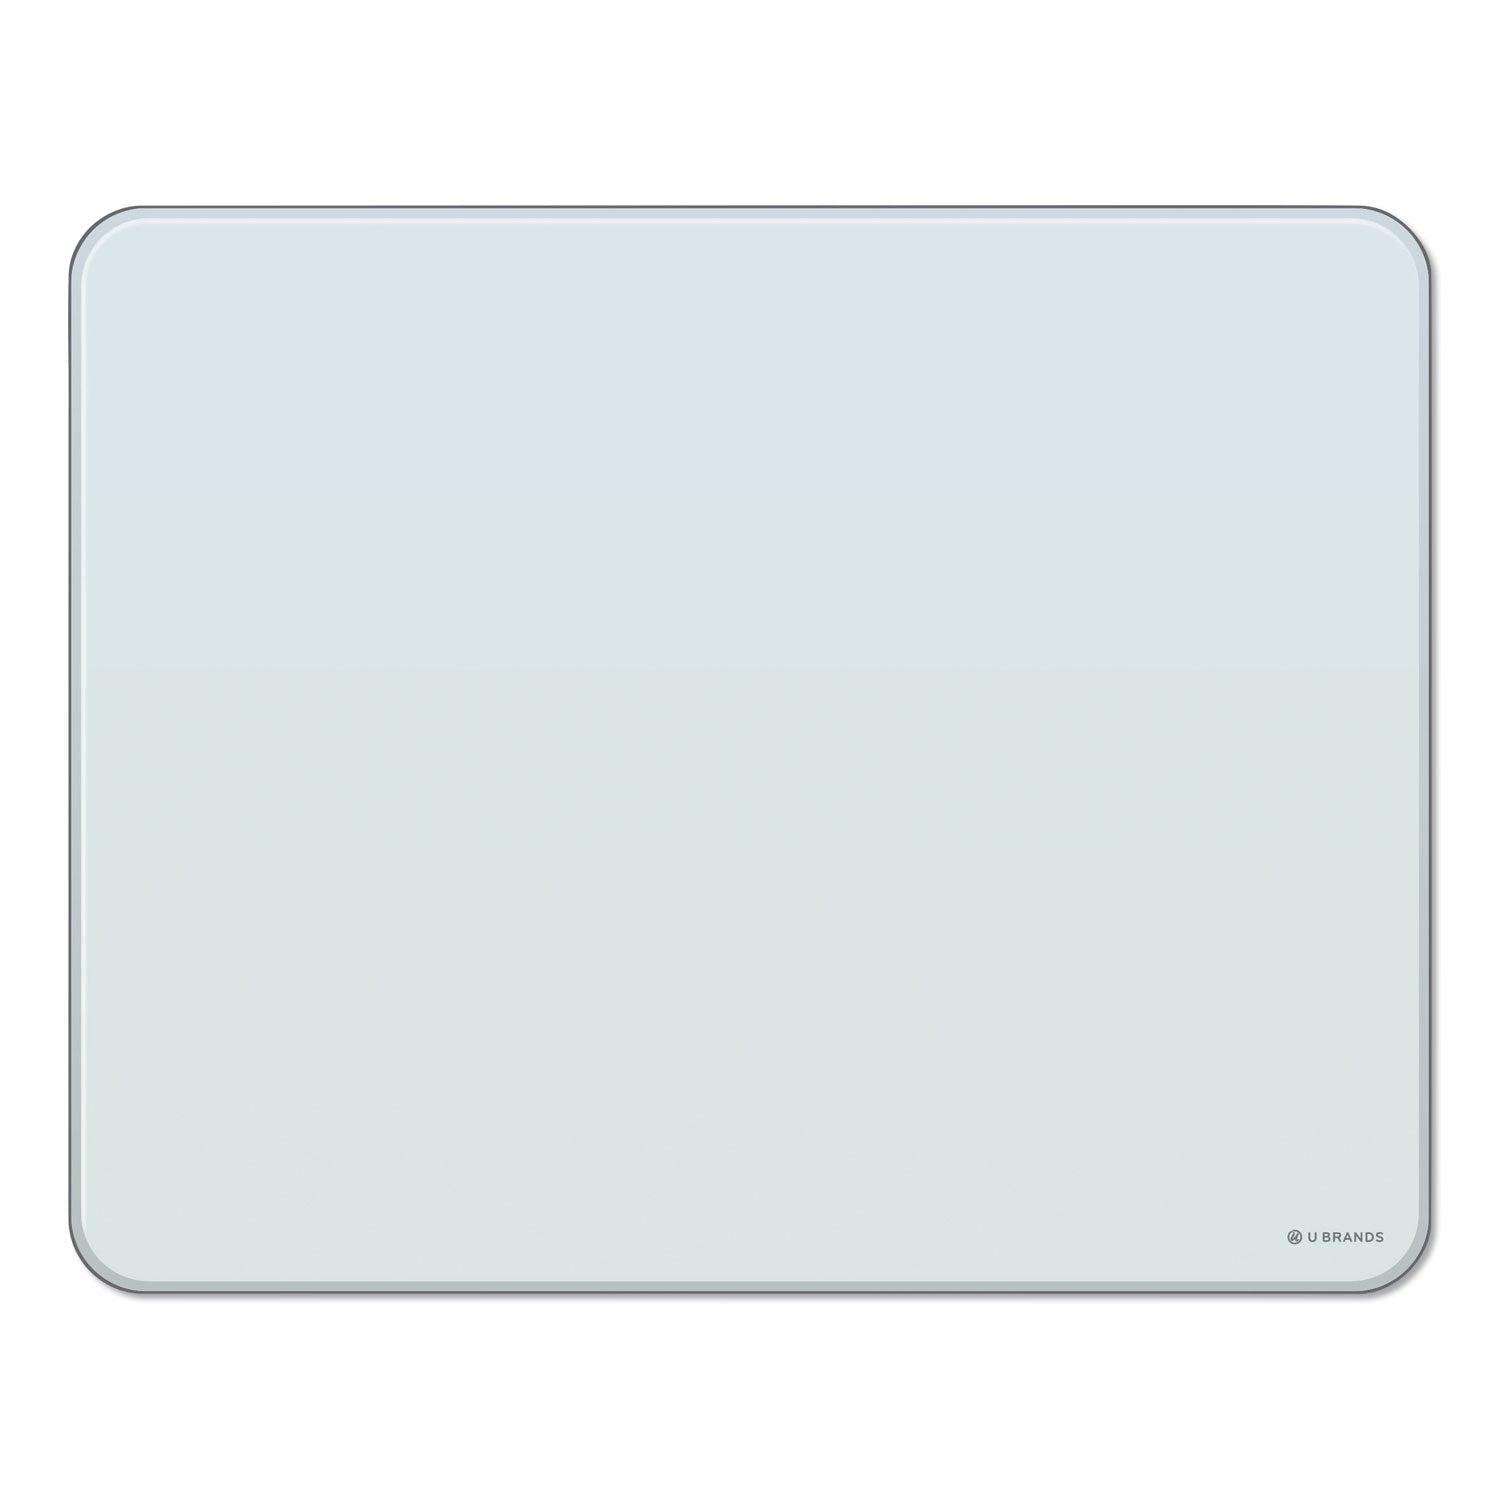 cubicle-glass-dry-erase-board-20-x-16-white-surface_ubr3689u0001 - 4